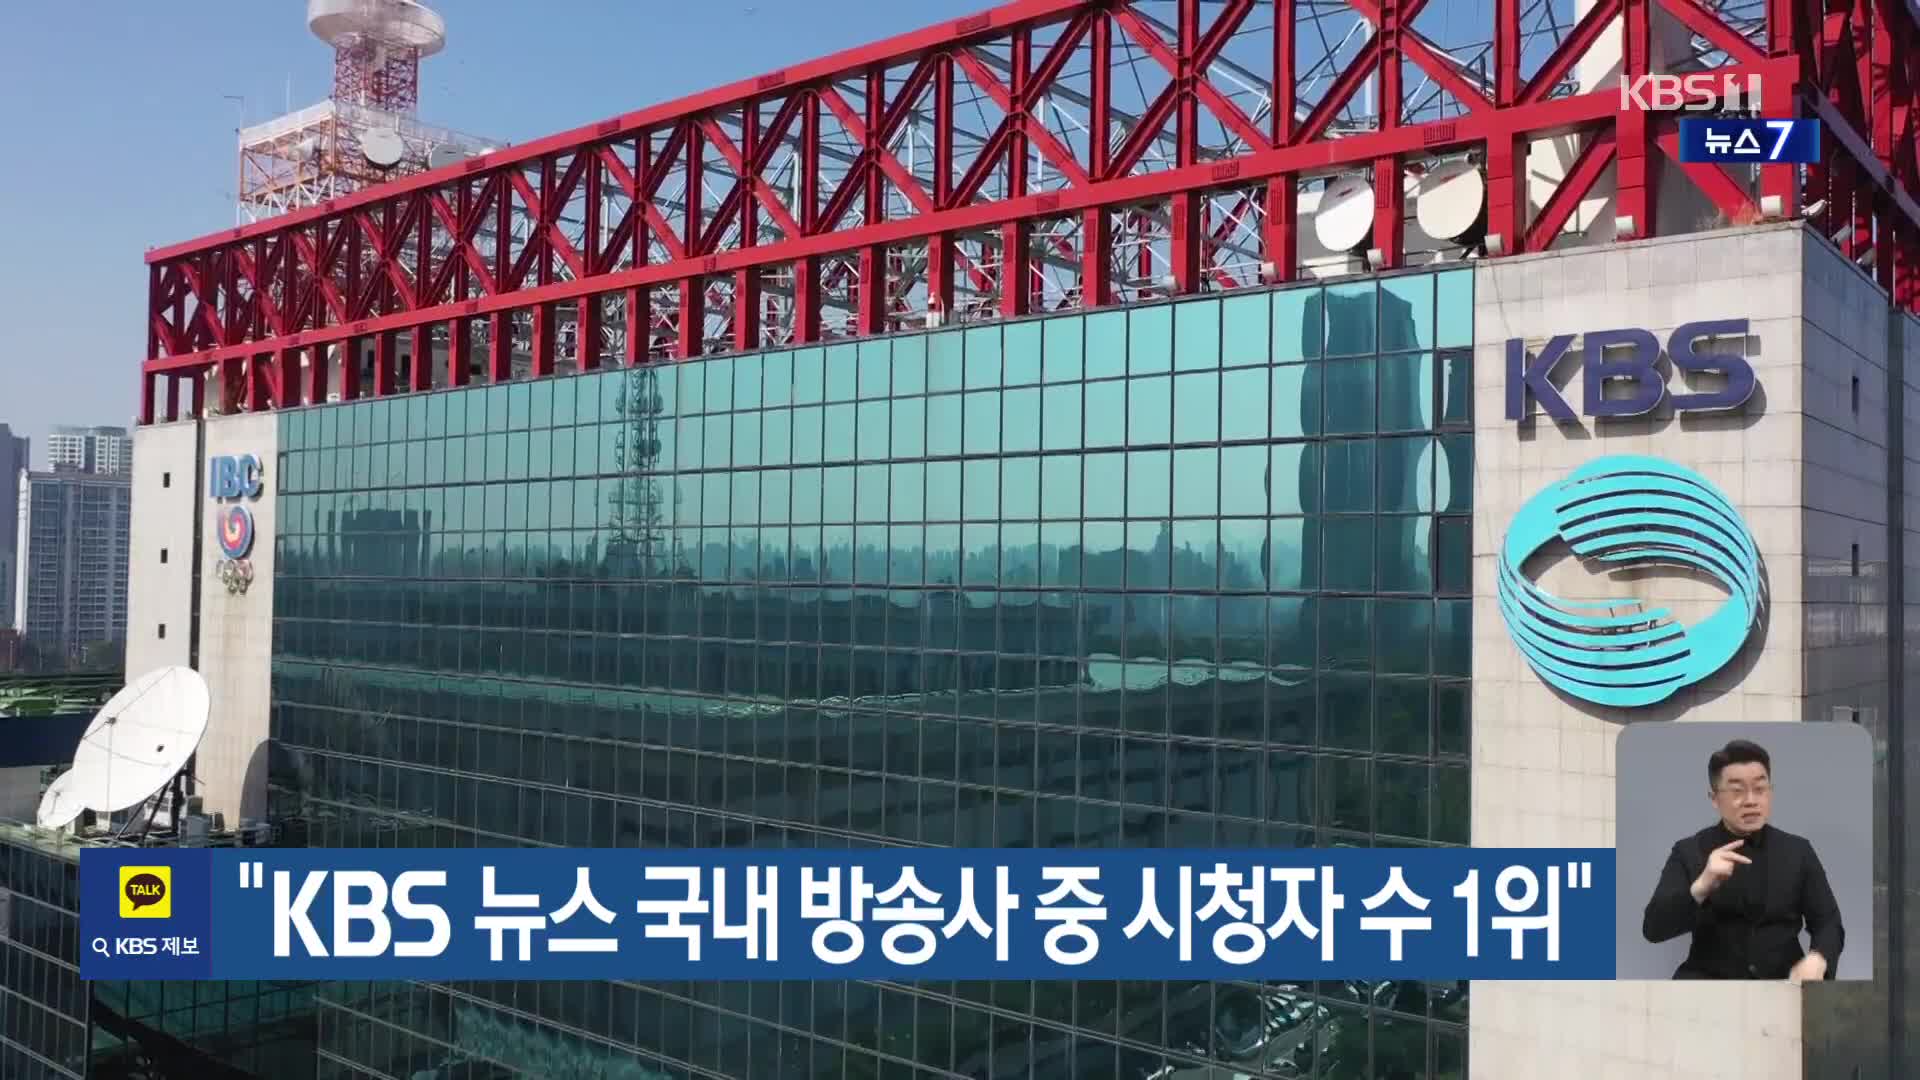 “KBS 뉴스 국내 방송사 중 시청자 수 1위”